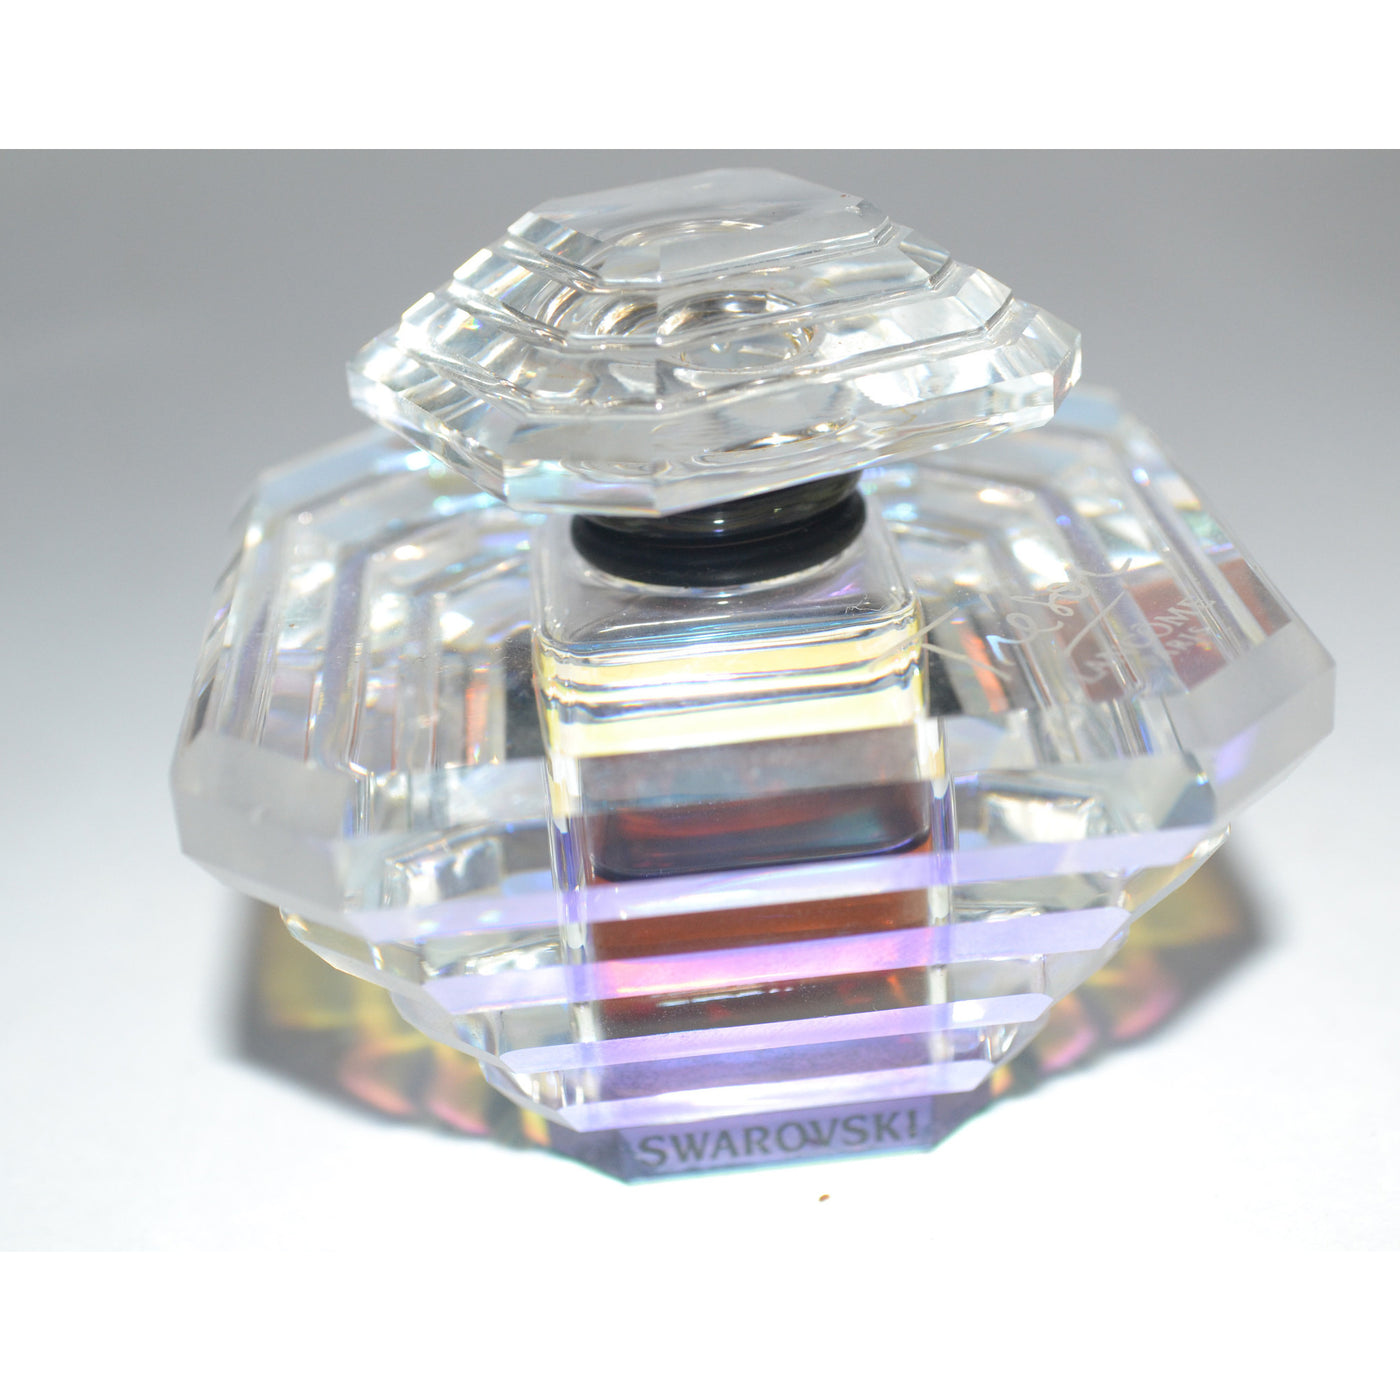 Vintage Tresor Swarovski Crystal Perfume Bottle By Lancome 